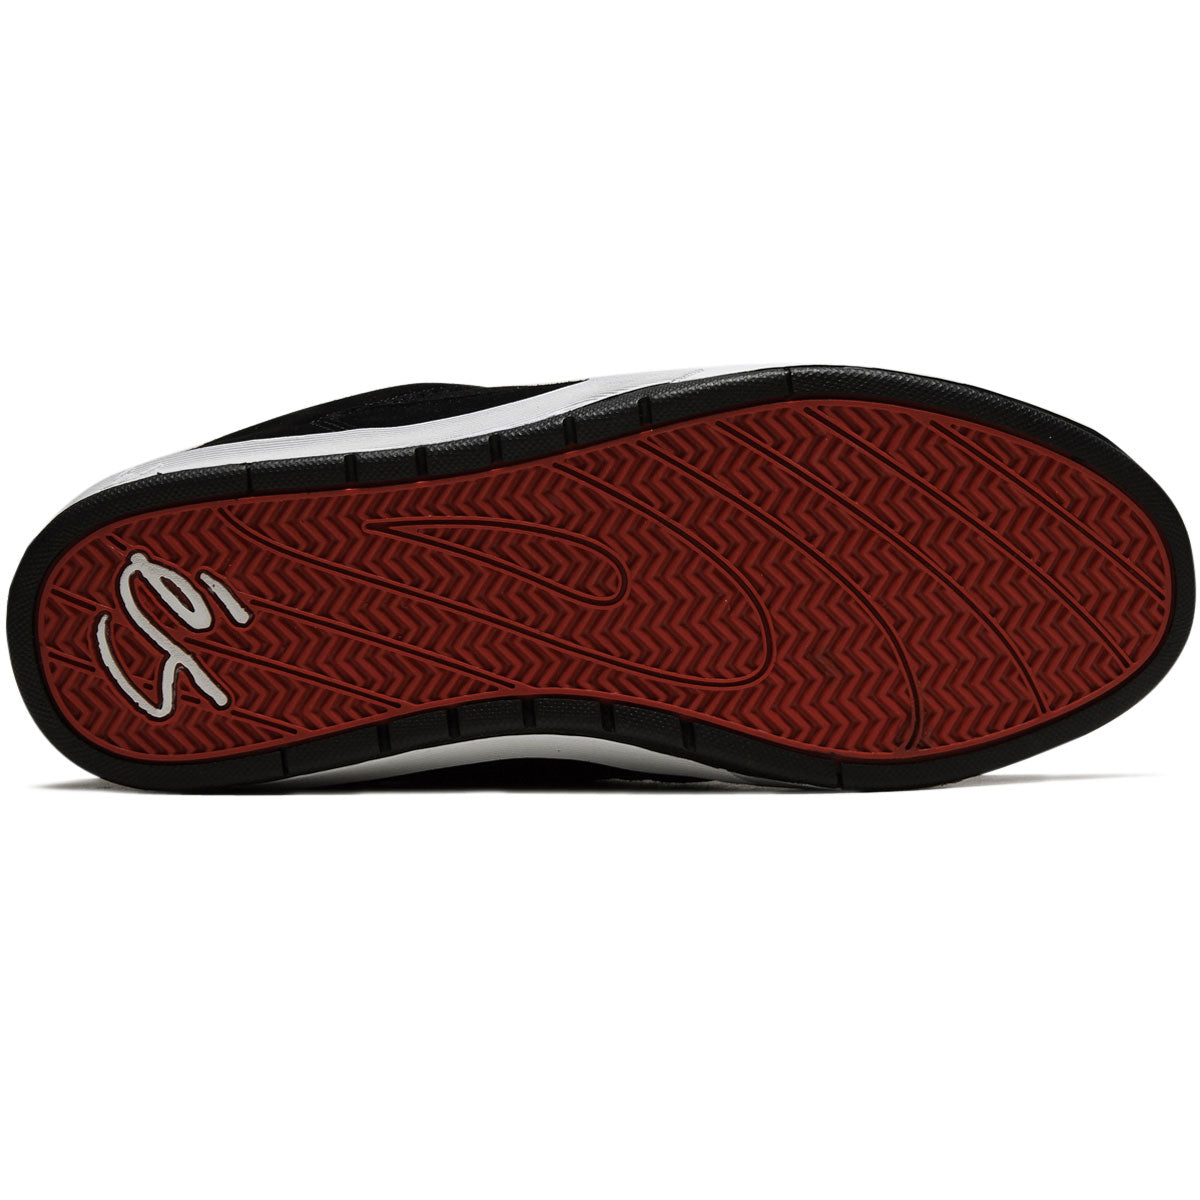 eS Accel Slim x Swift 1.5 Shoes - Black/White/Red image 4